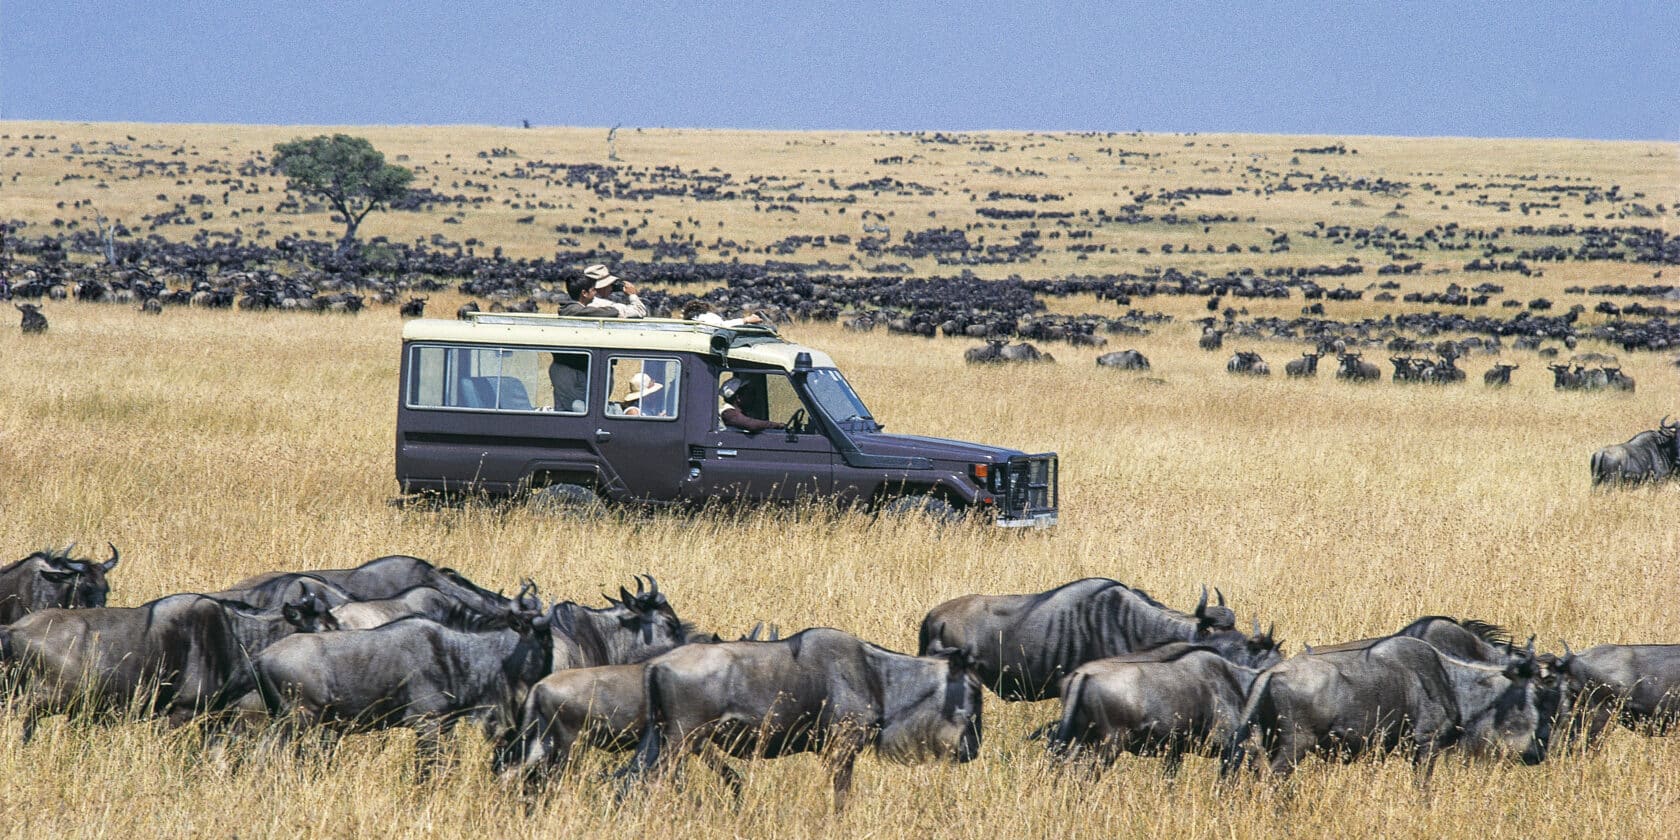 Toyota Landcruiser on a game drive through vast herds of Wildebeest grazing in the Masai Mara National Reserve Kenya